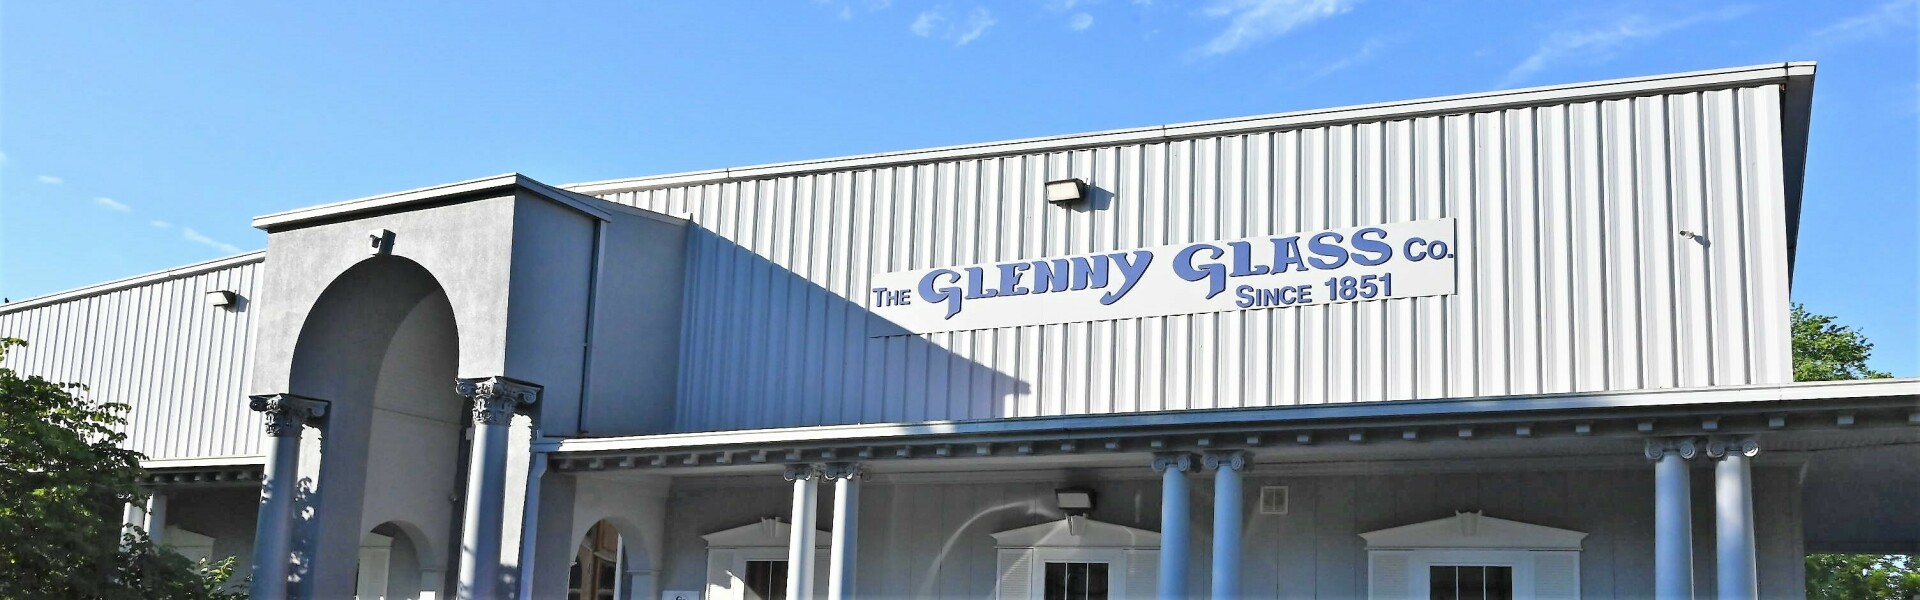 Glenny Glass building logo